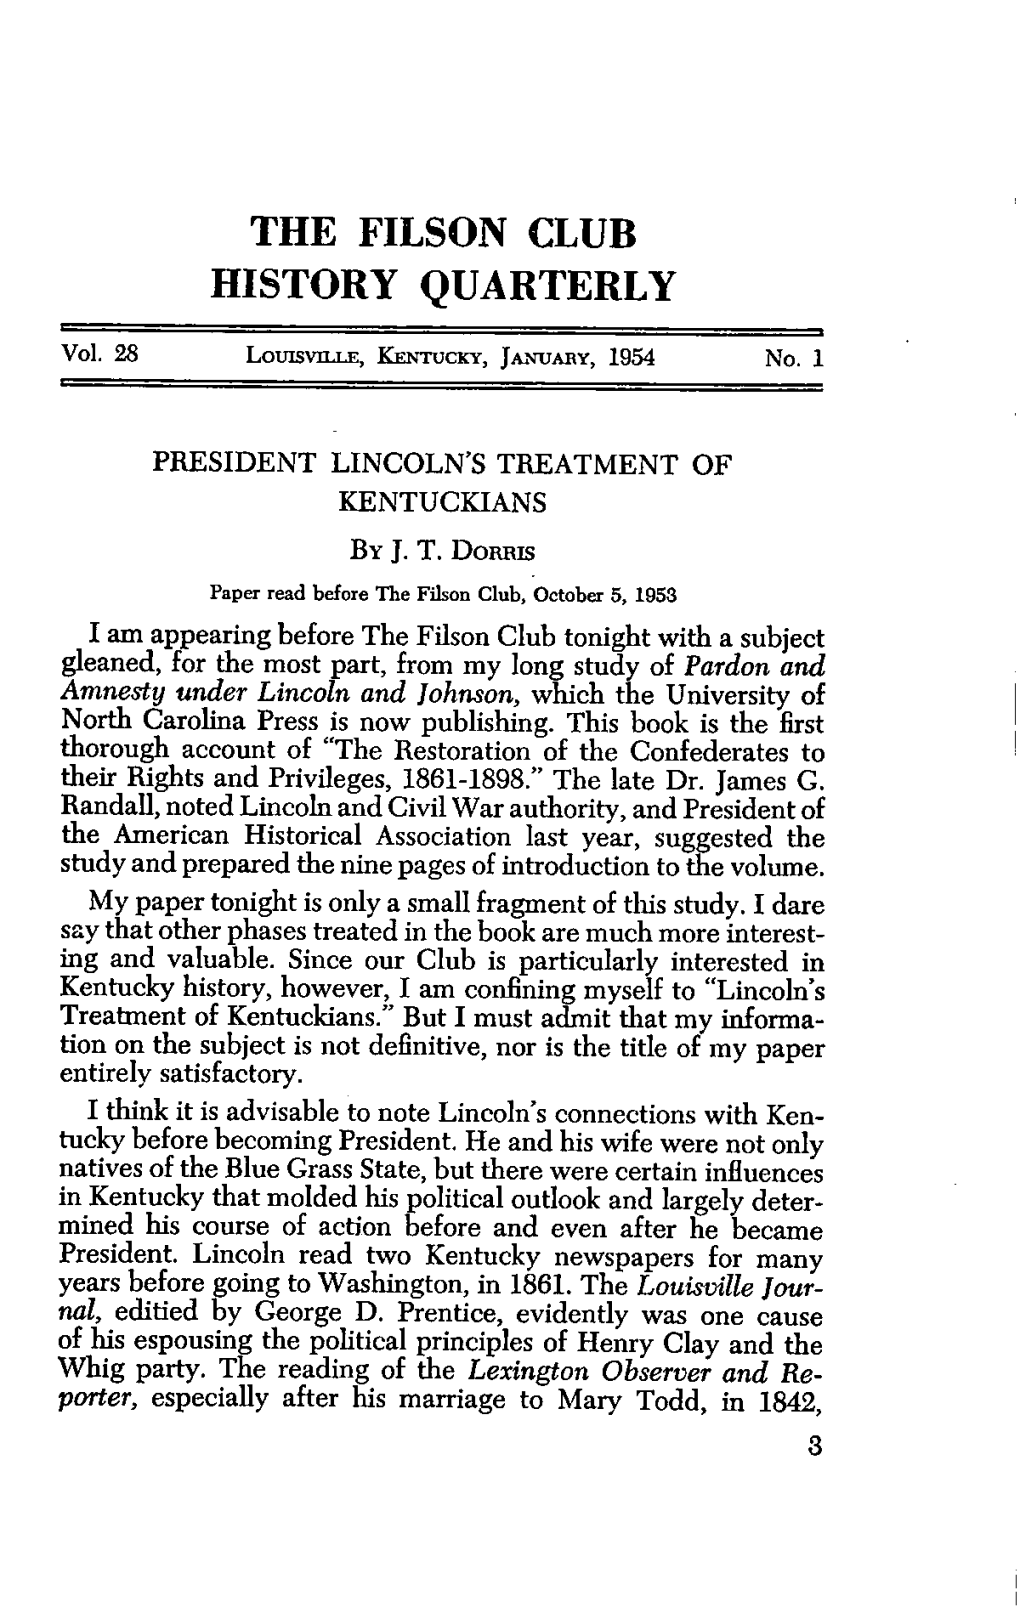 Presidents Lincolns Treatment of Kentuckians